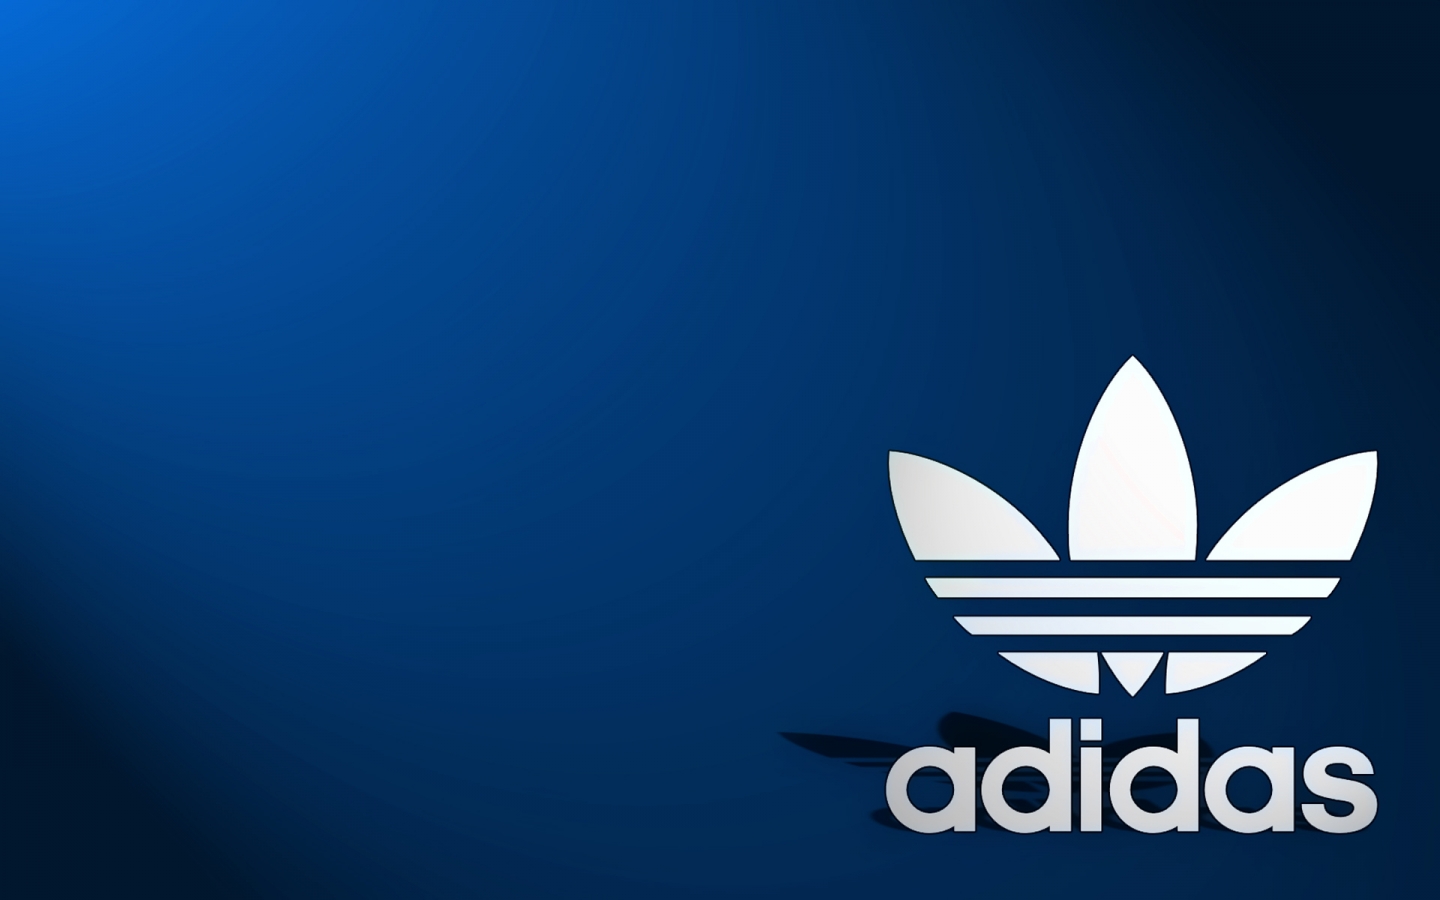 Adidas Logo Blue Background for 1440 x 900 widescreen resolution